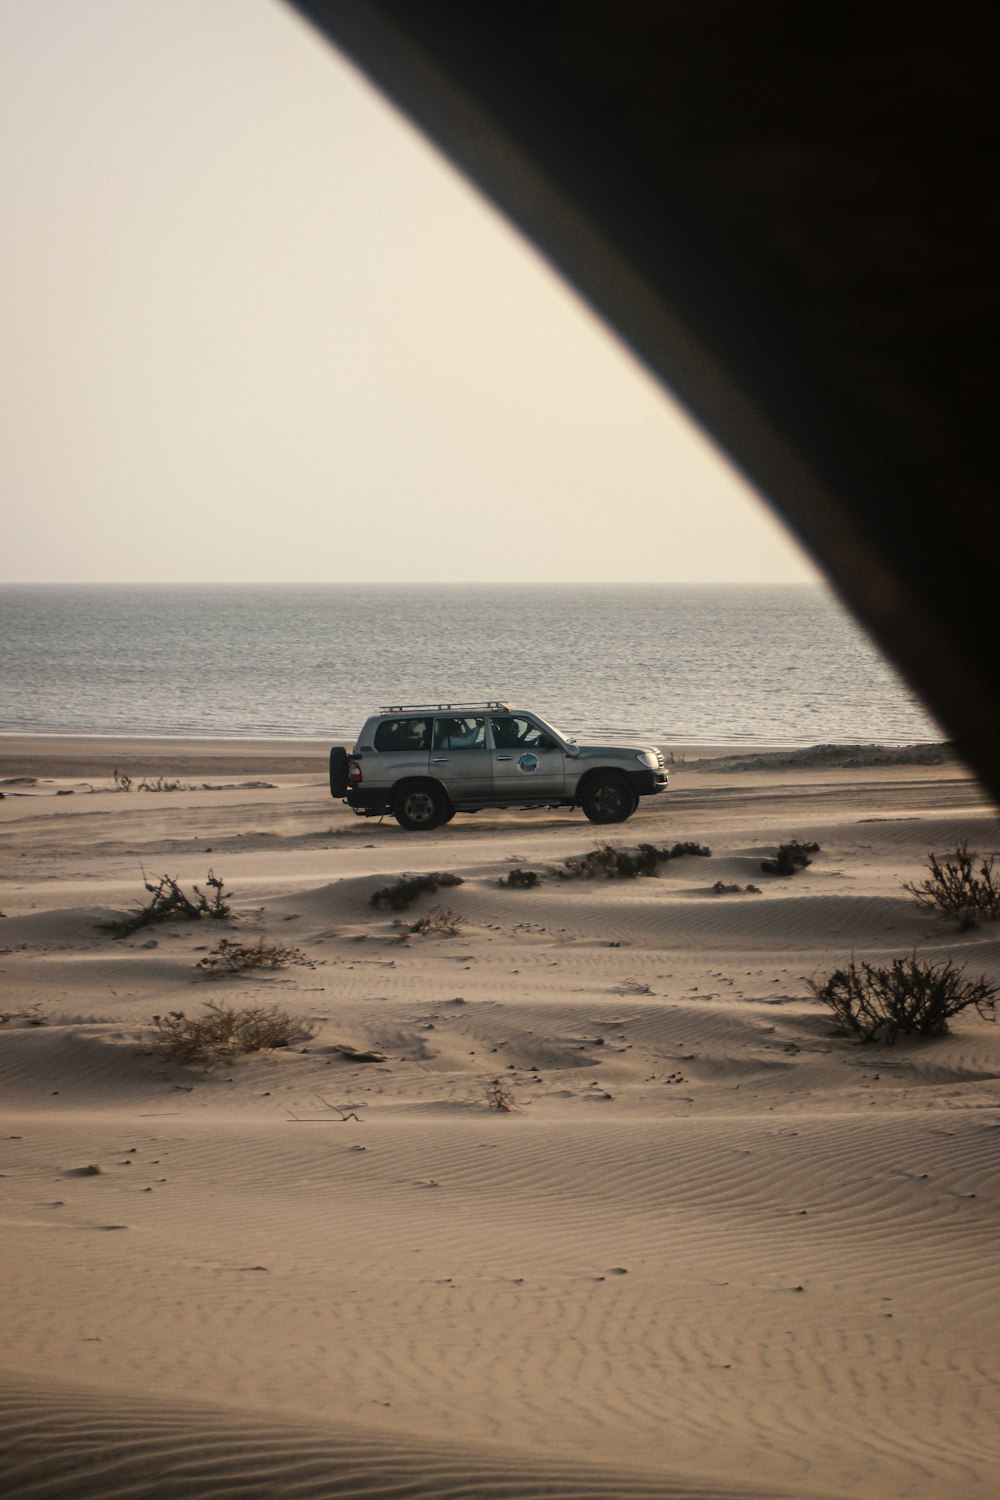 a car driving on a sandy beach